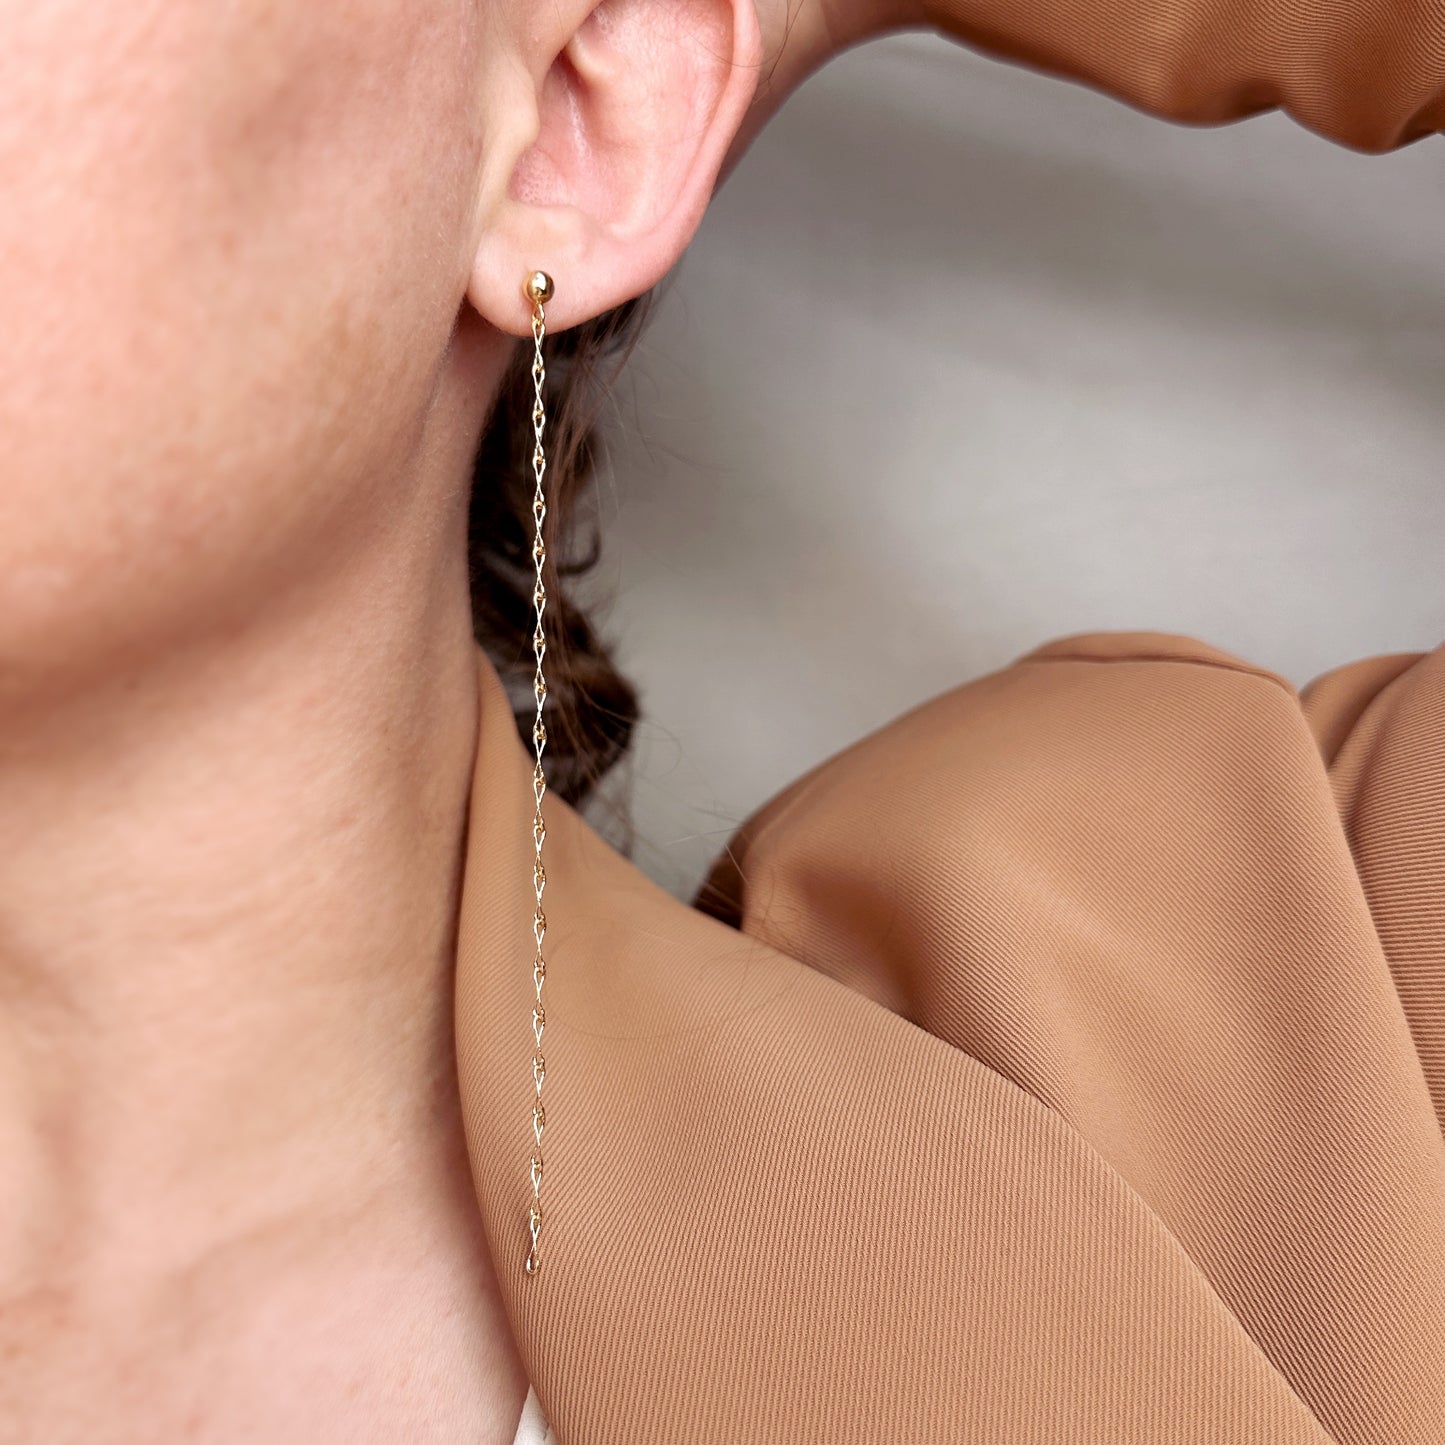 18k Gold Filled Detailed Chain Drop Earrings